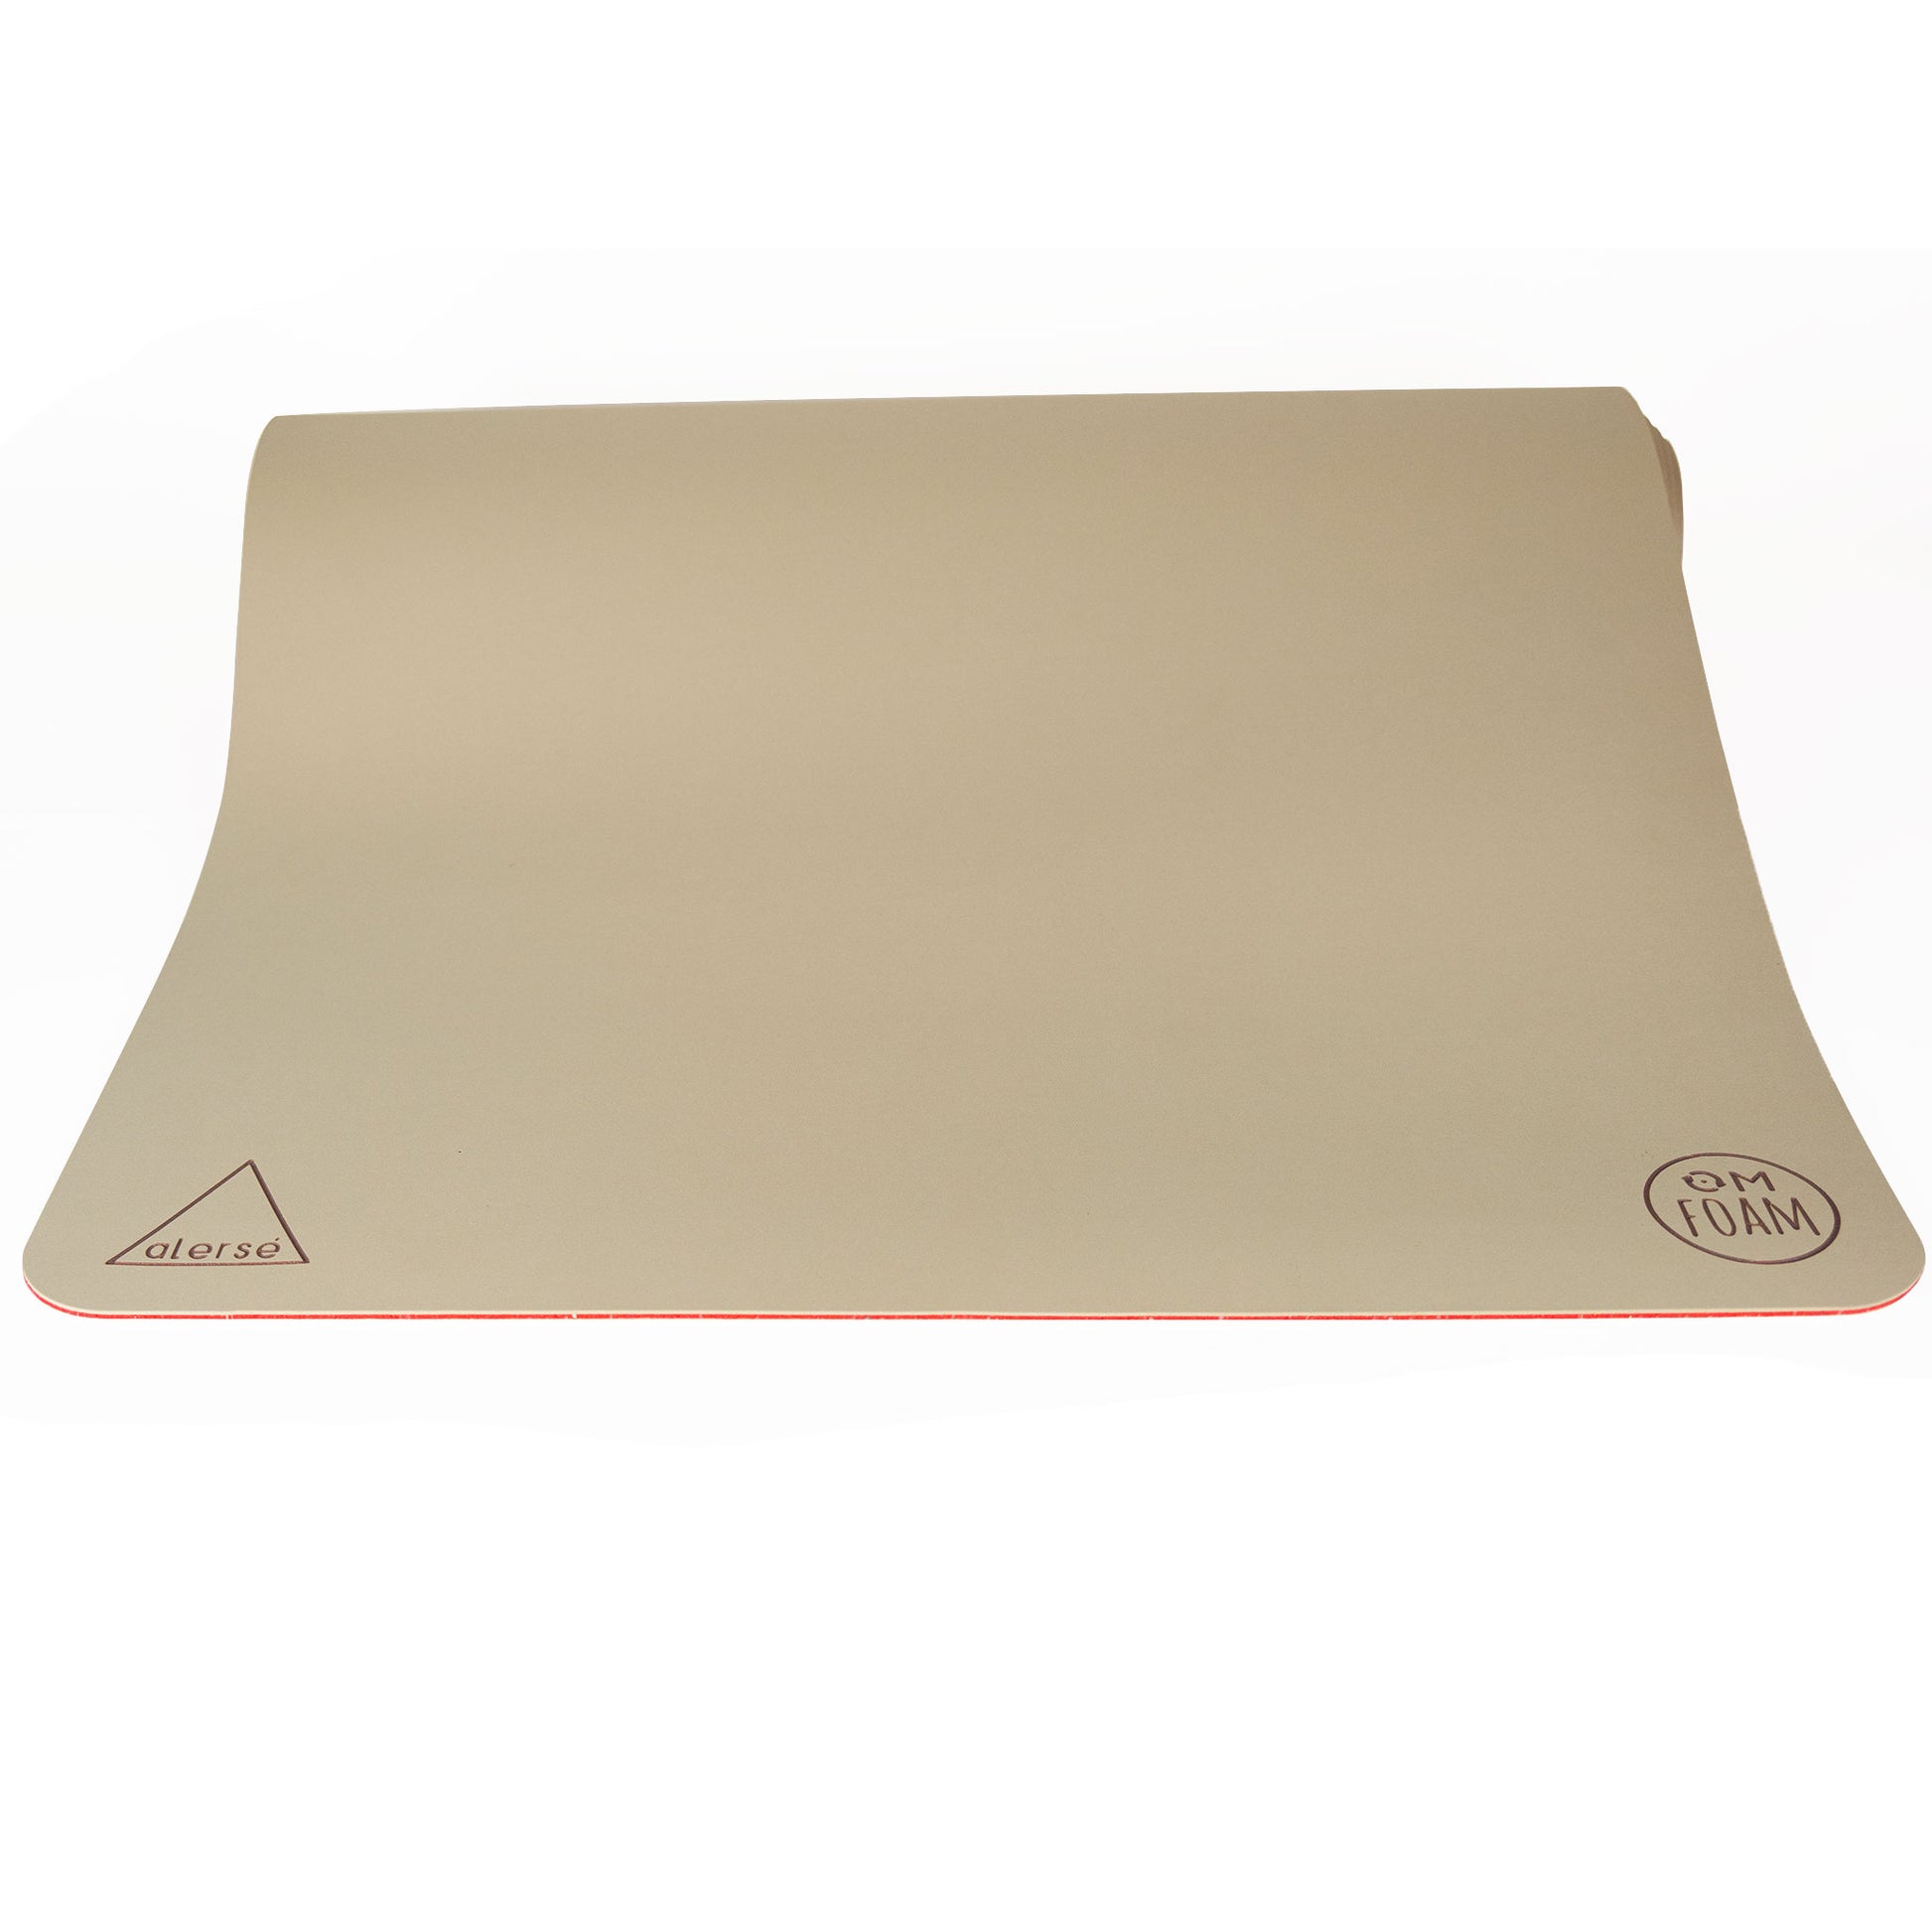 NEW!! alerse LIGHT Yoga Mat - Premium 6mm thick, 2.5lbs. - Sand